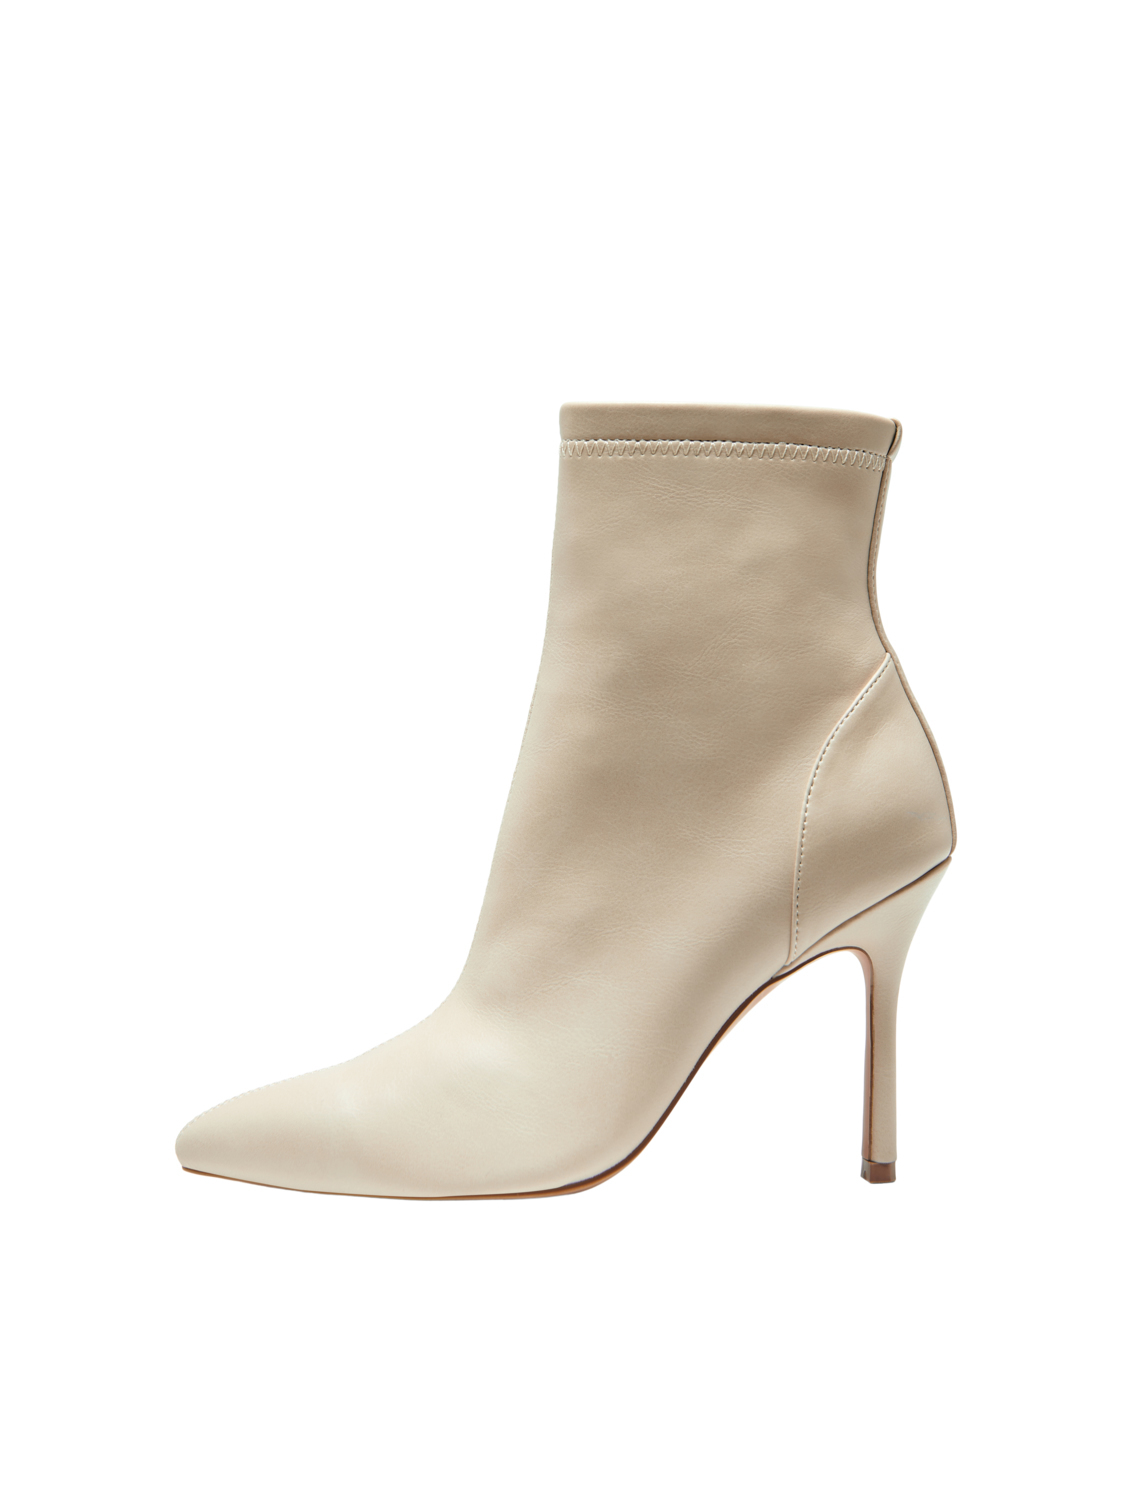 FINAL SALE- Cali stiletto heel ankle boots, CREME, large